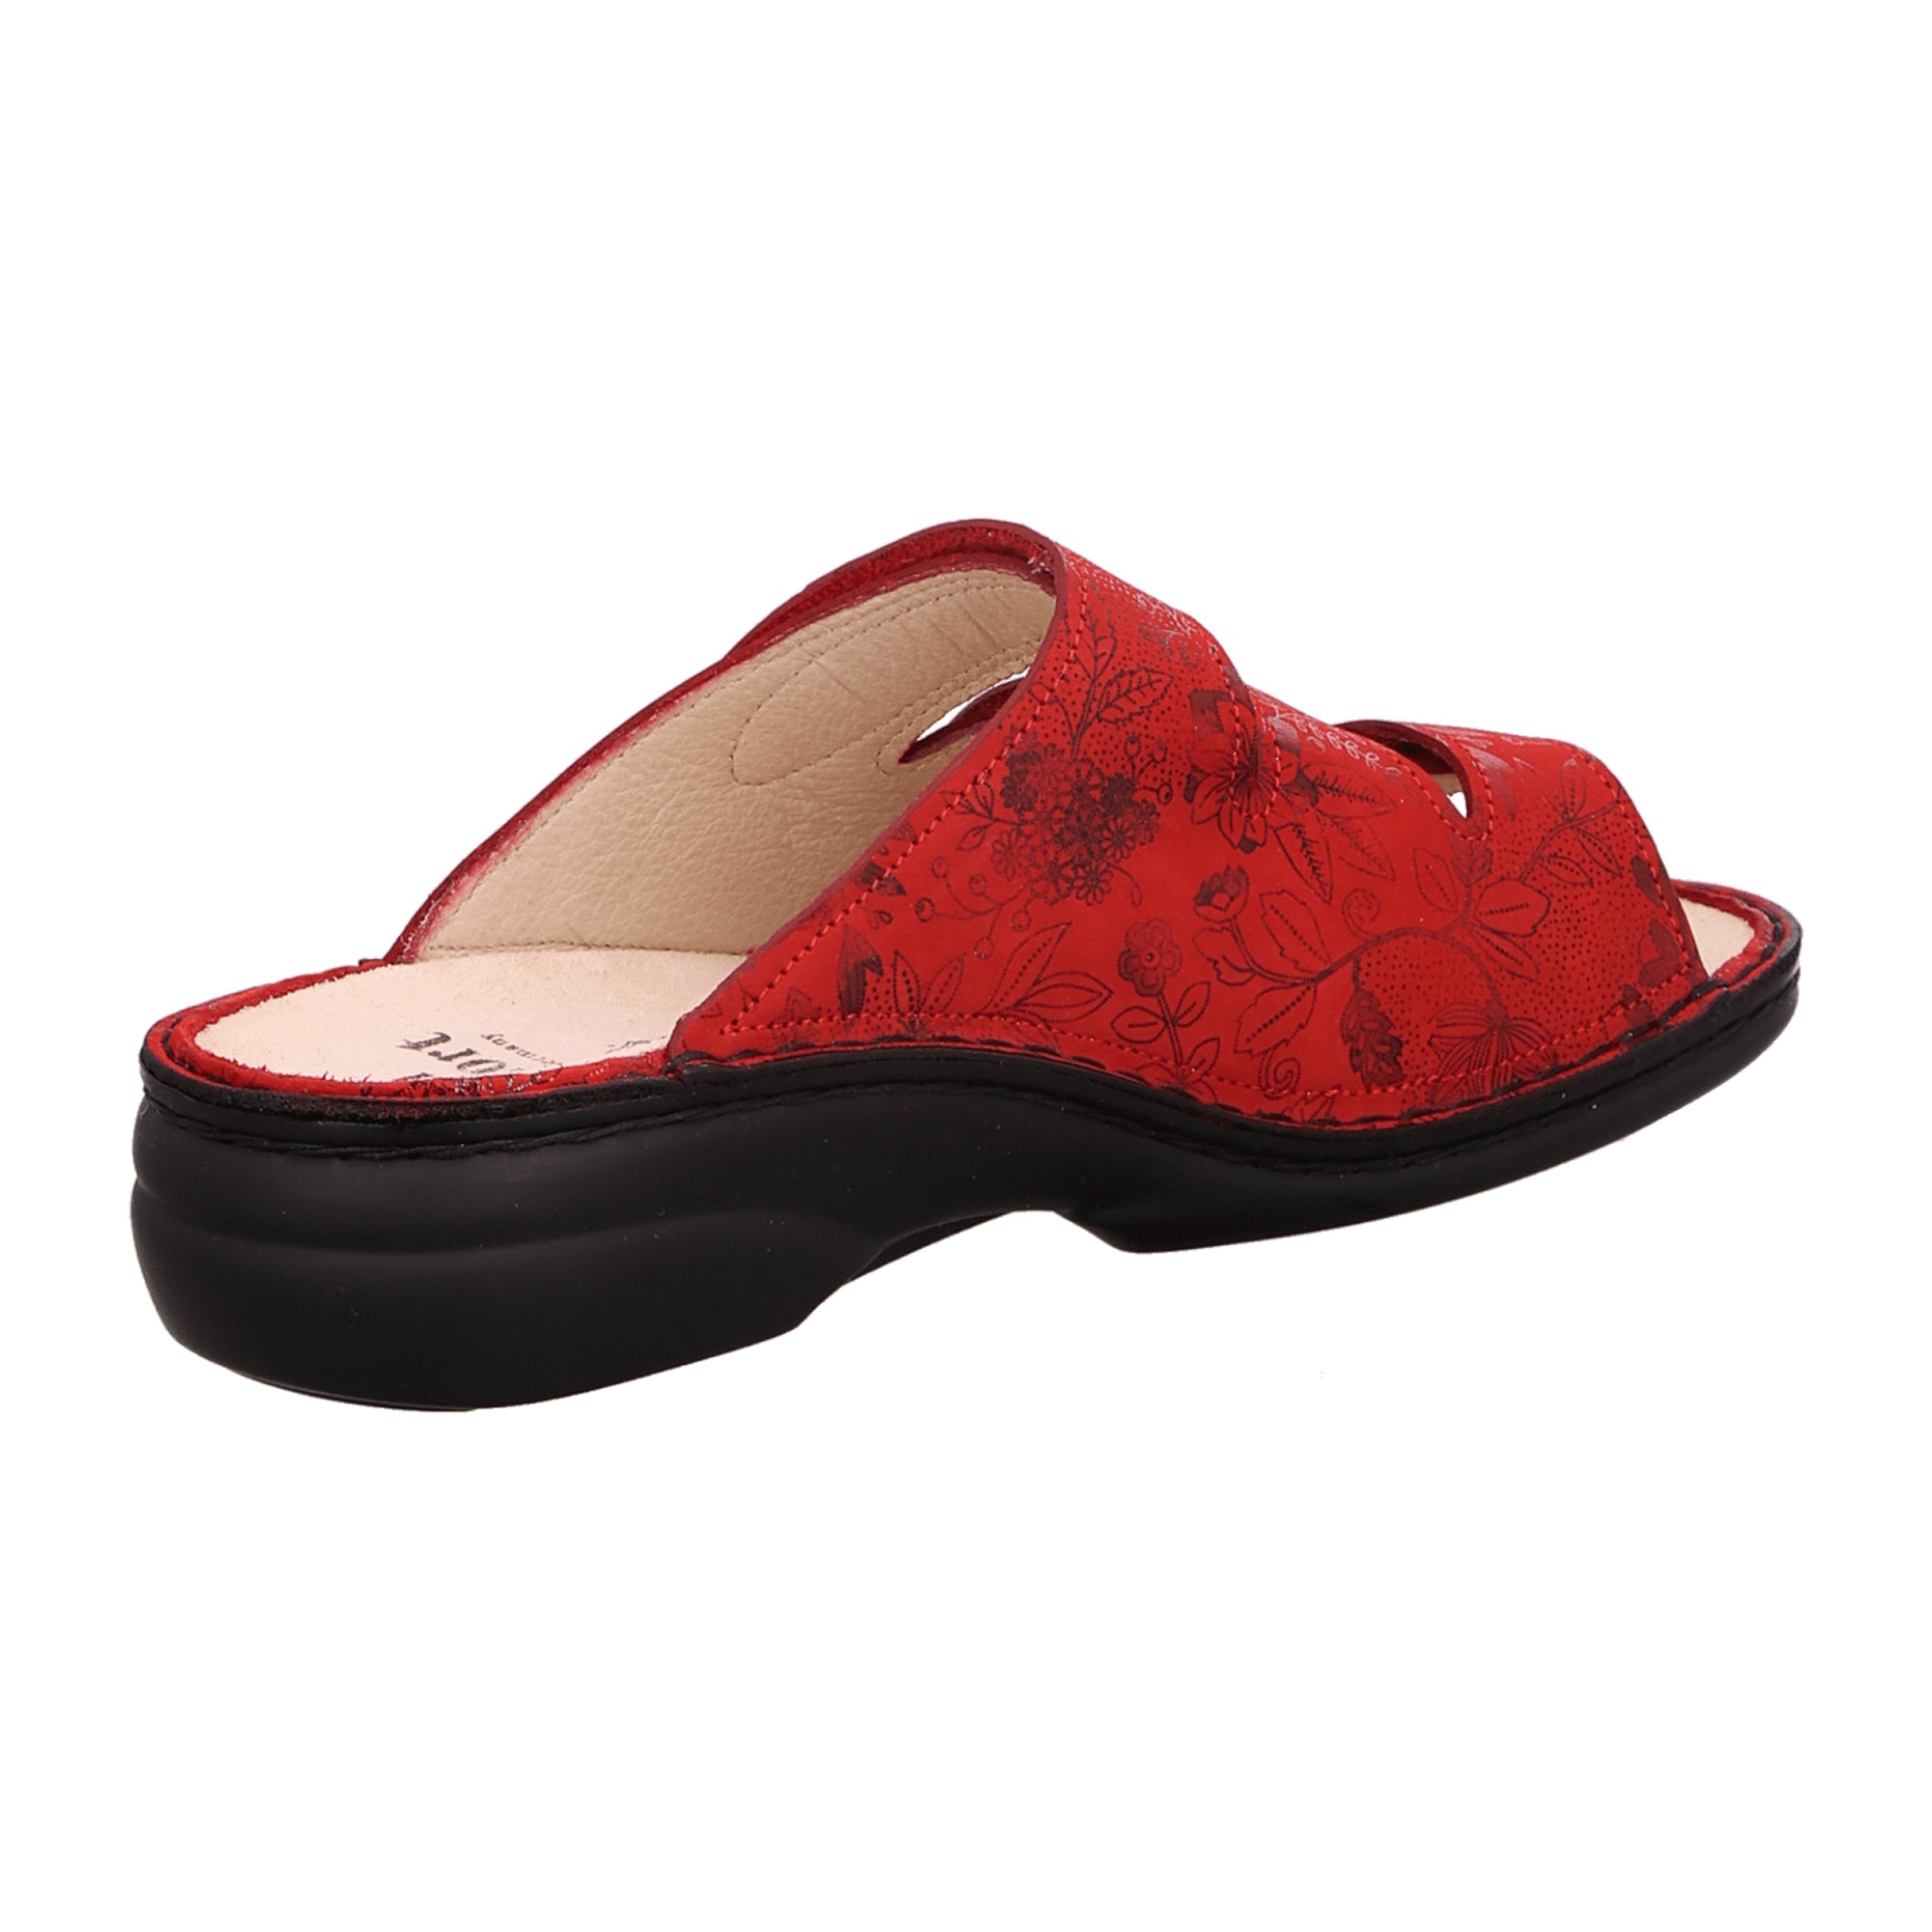 Finn Comfort Kos Women's Red Sandals - Stylish & Comfortable